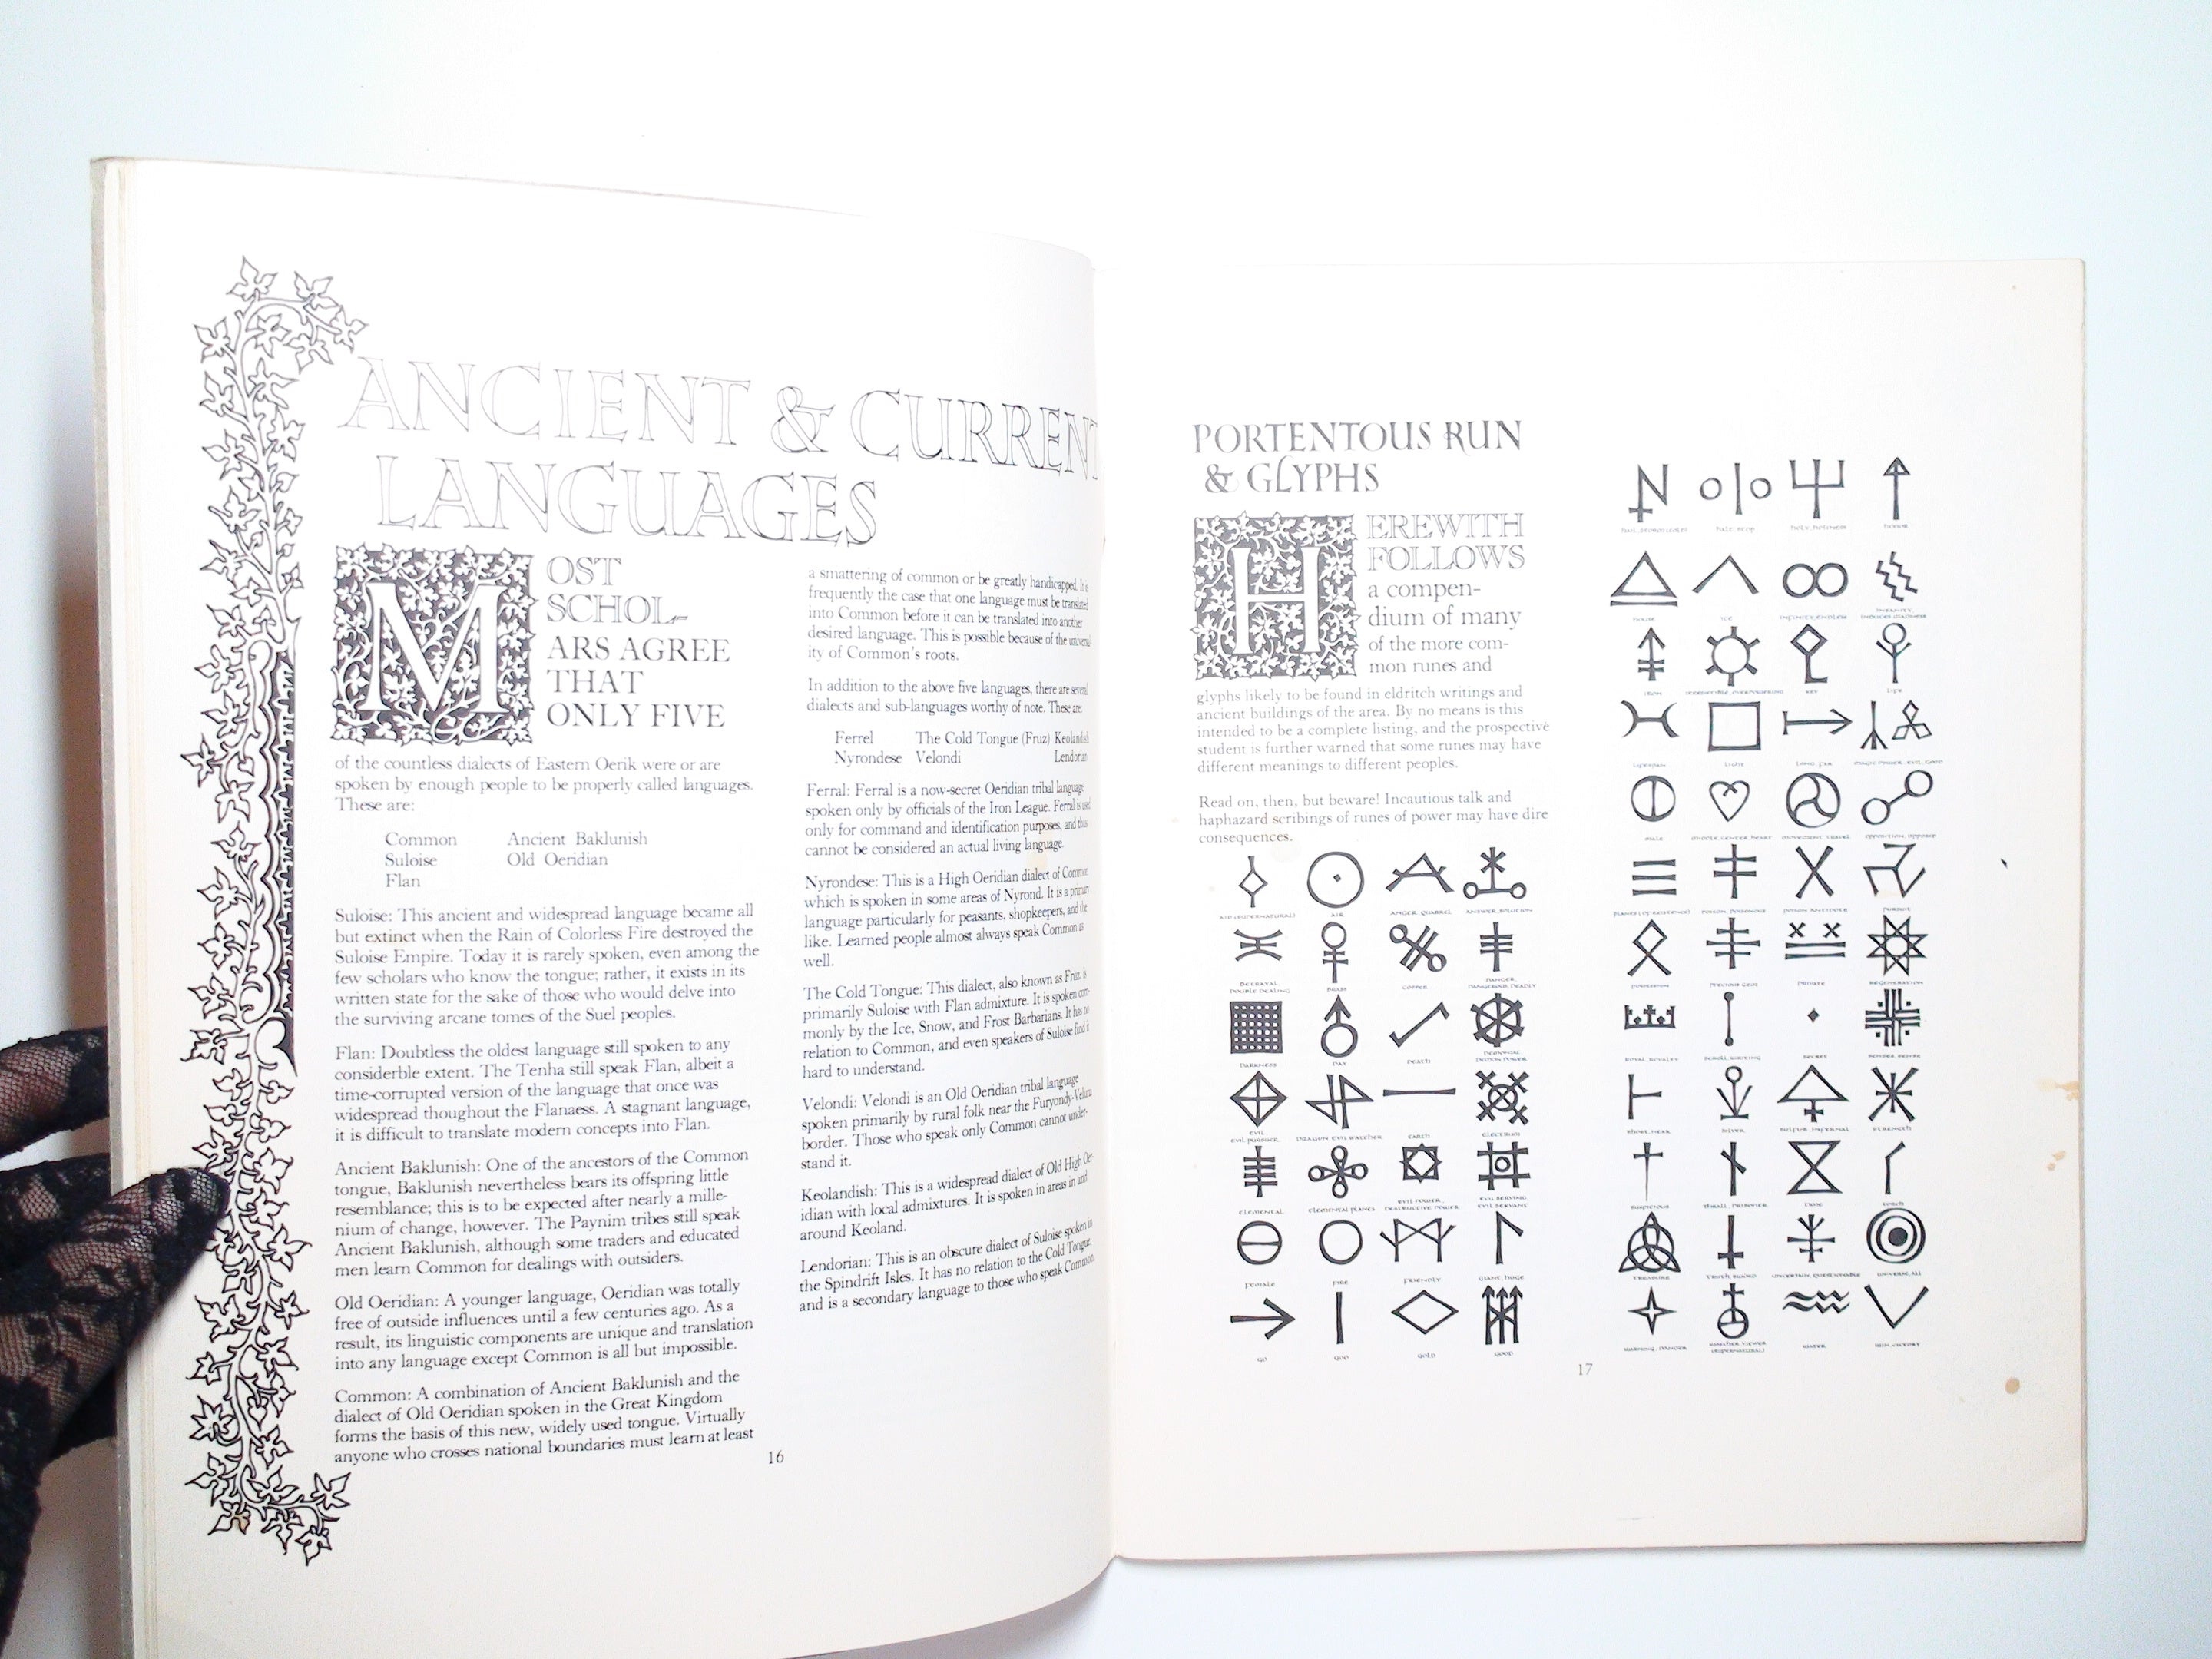 A Guide to Greyhawk Vol III + Glossography, By Gary Gygax, TSR, 1983